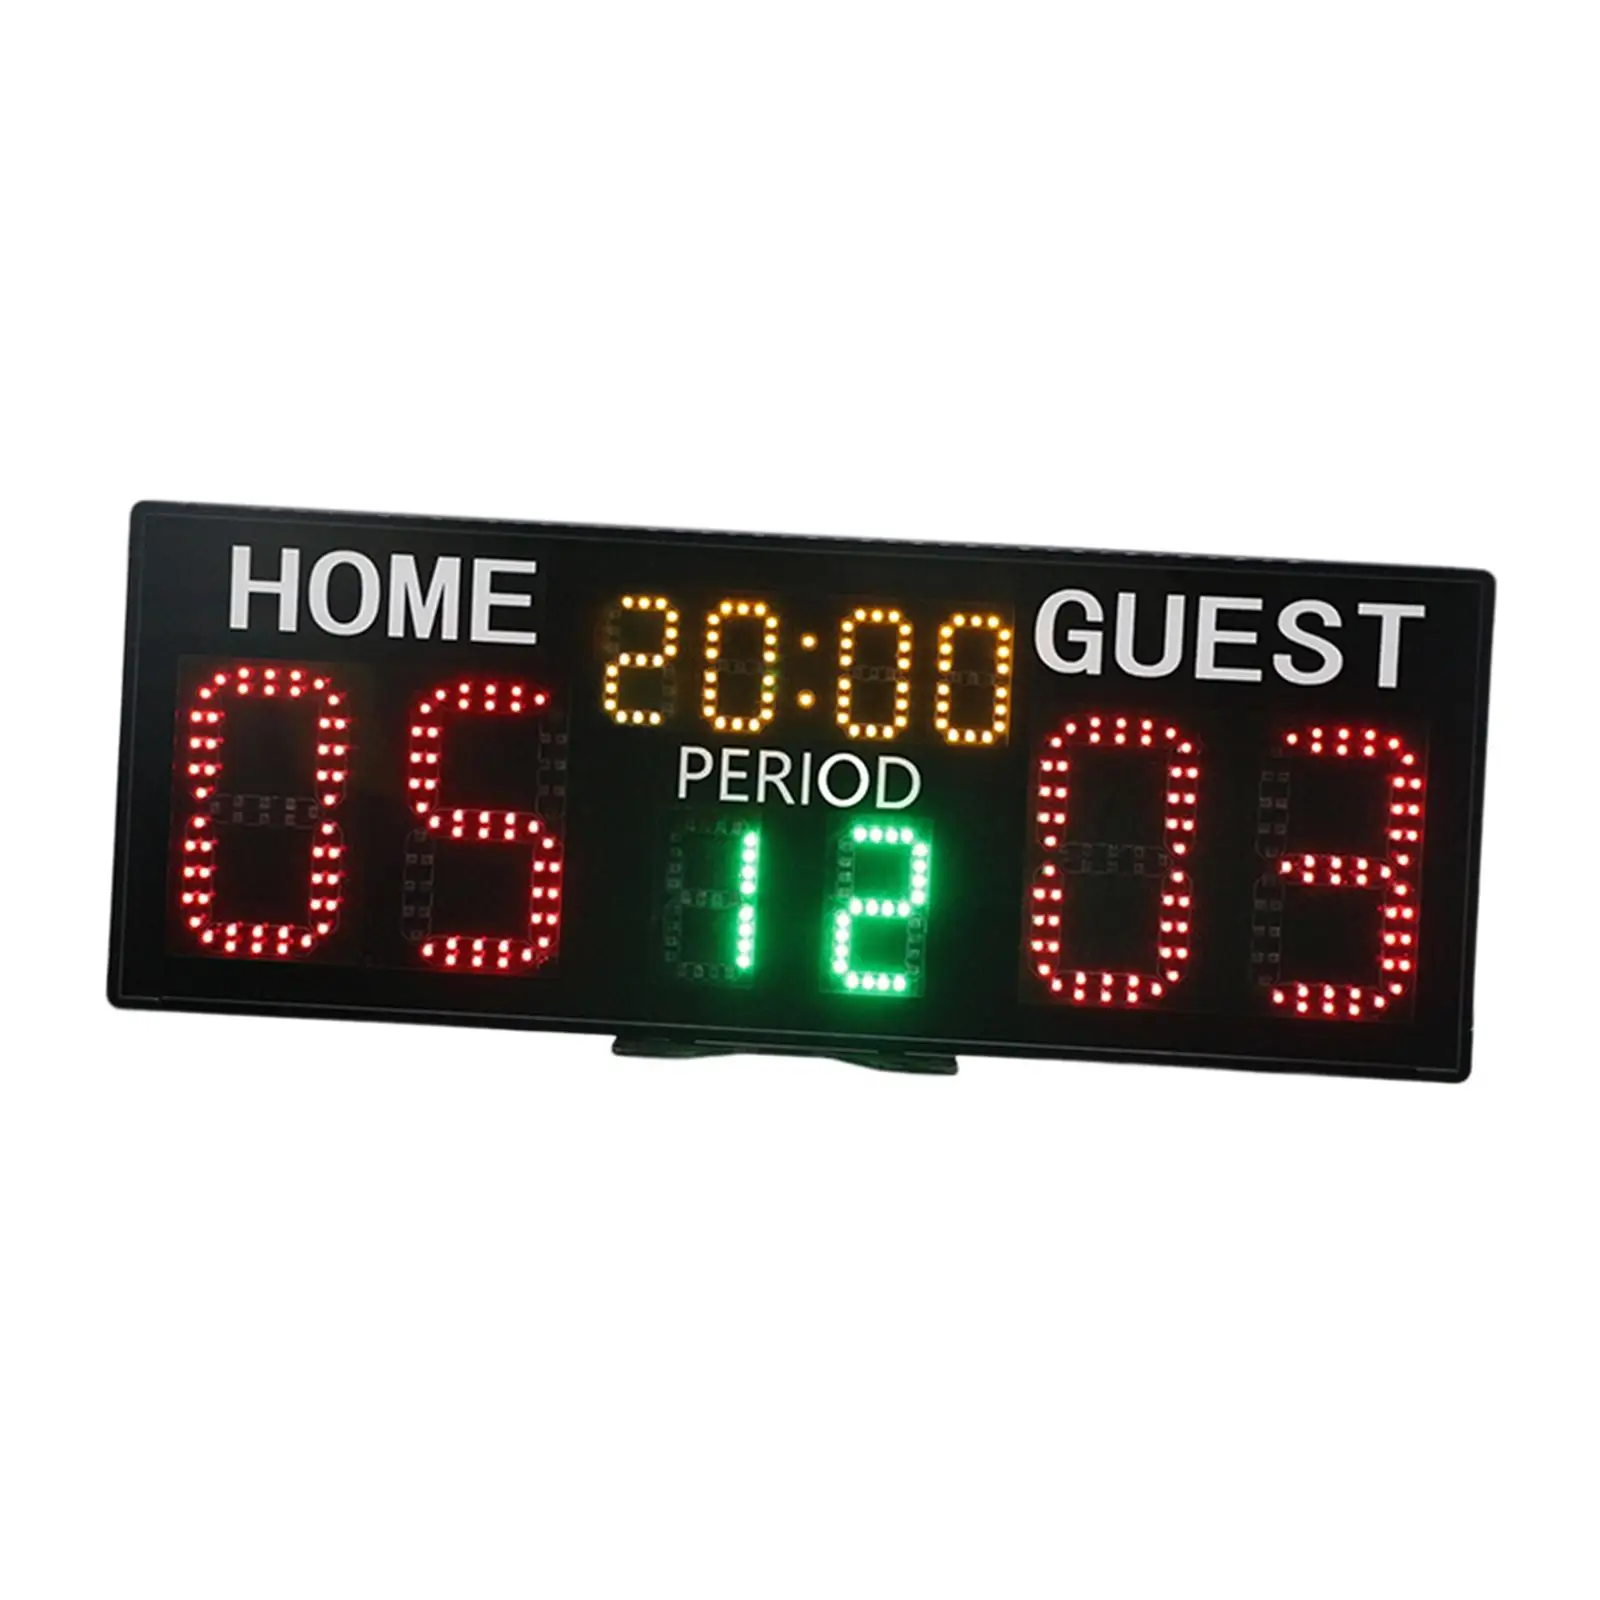 Electronic Scoreboard Tabletop Tennis Score Keeper Digital Score Board for Soccer Softball Basketball Table Tennis Games